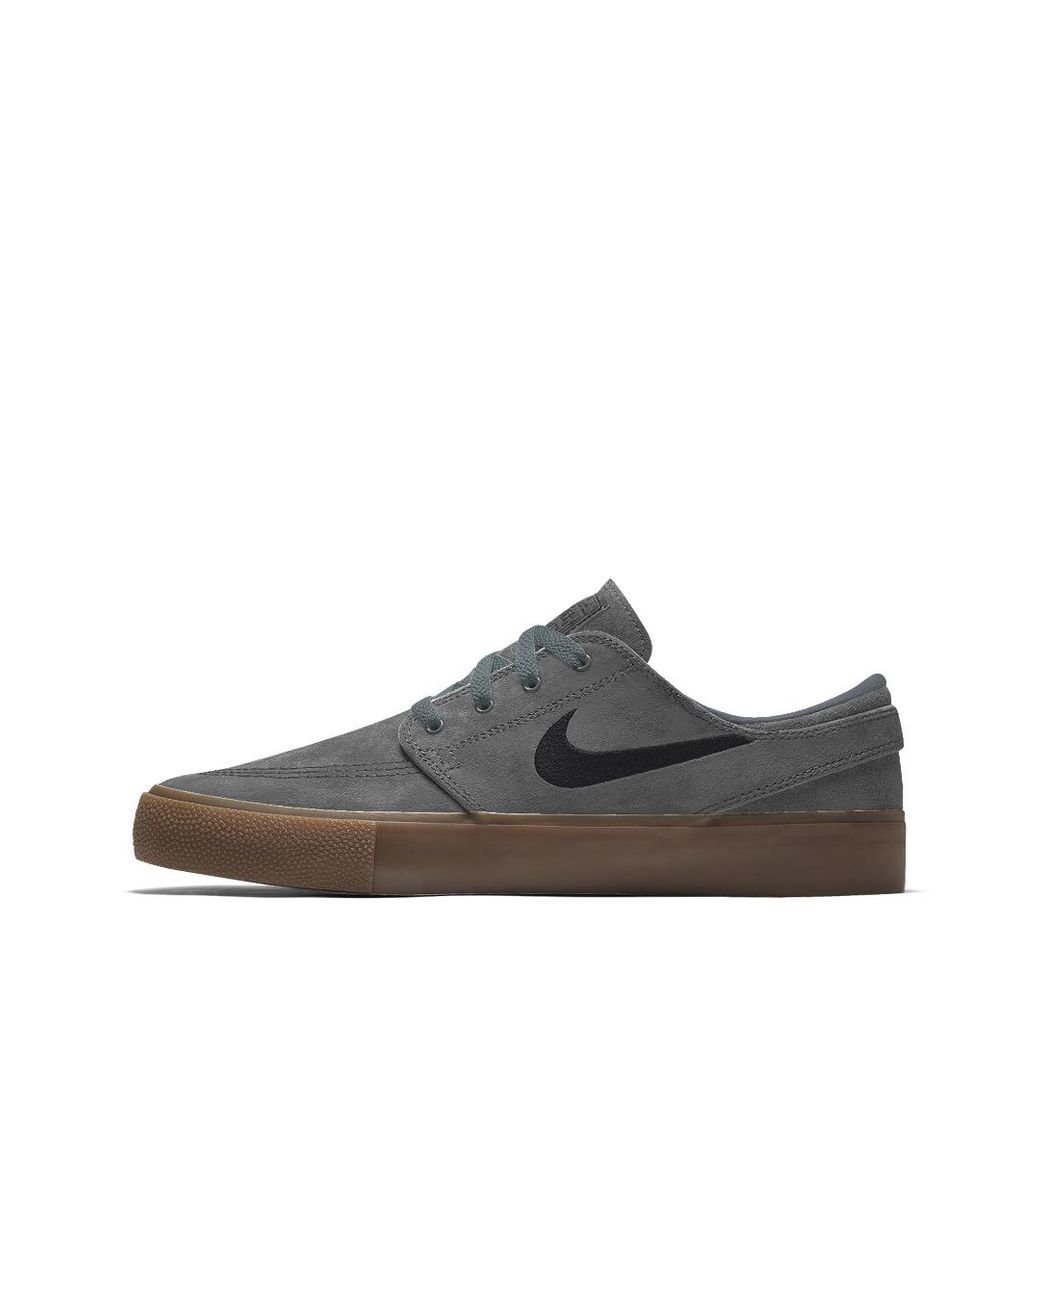 Nike Sb Zoom Stefan Janoski Rm By You Custom Skate Shoe in Brown |